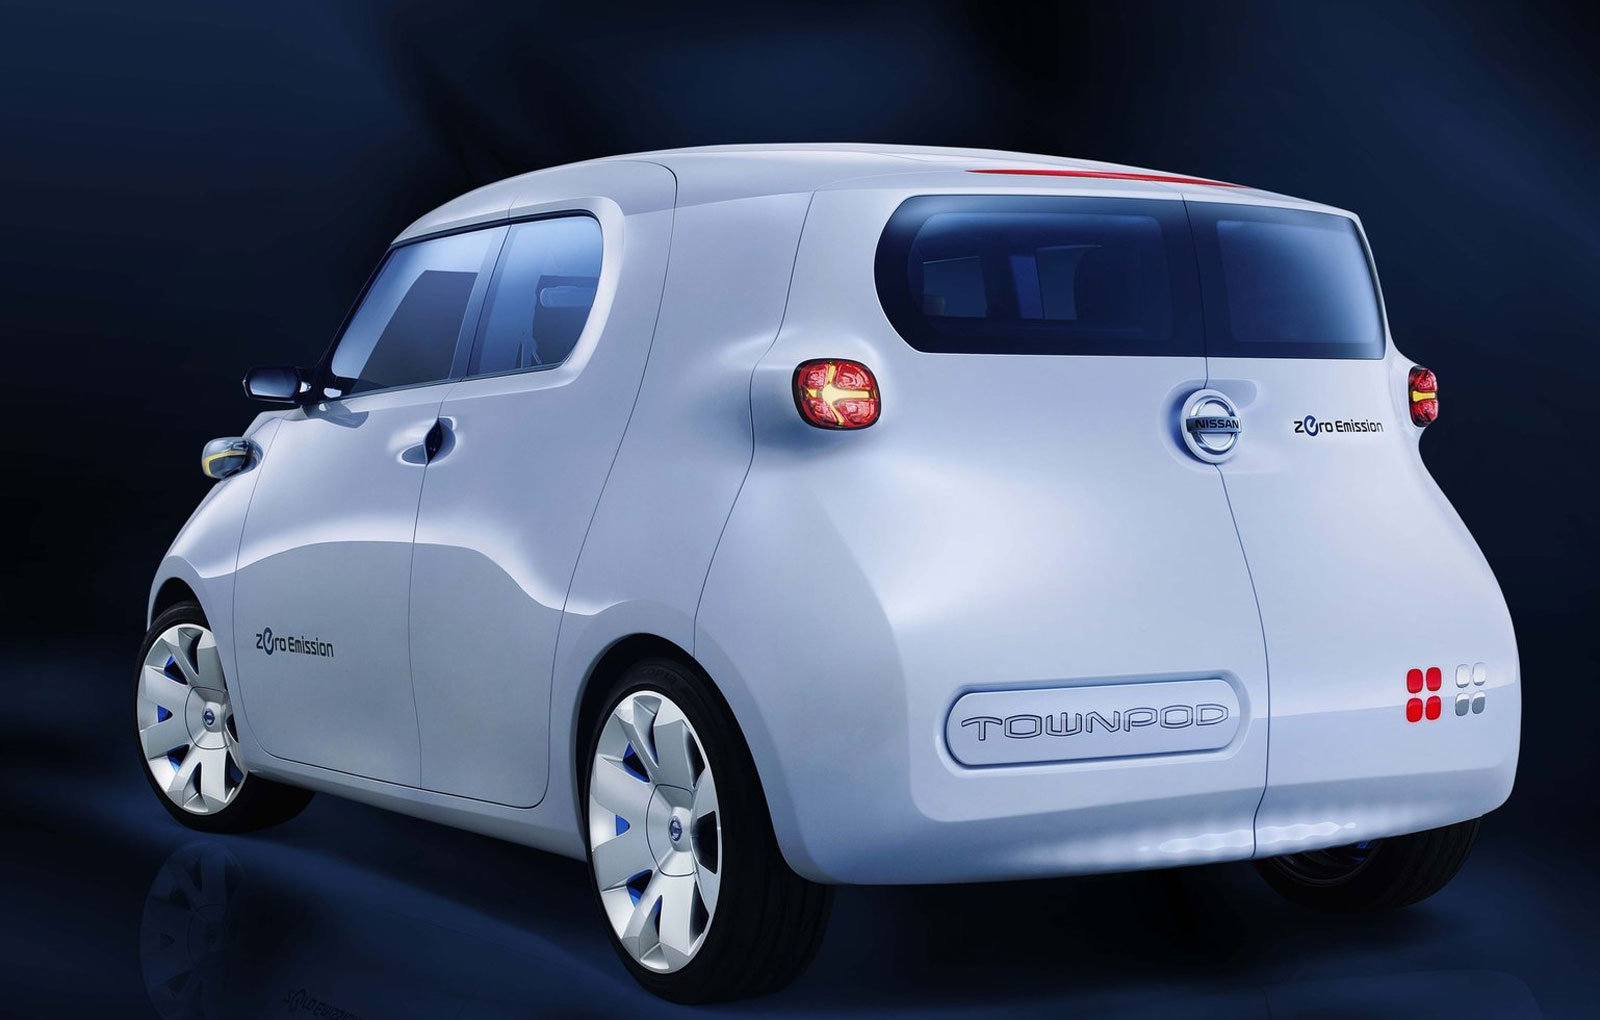 Nissan Townpod Concept Cars Wallpaper